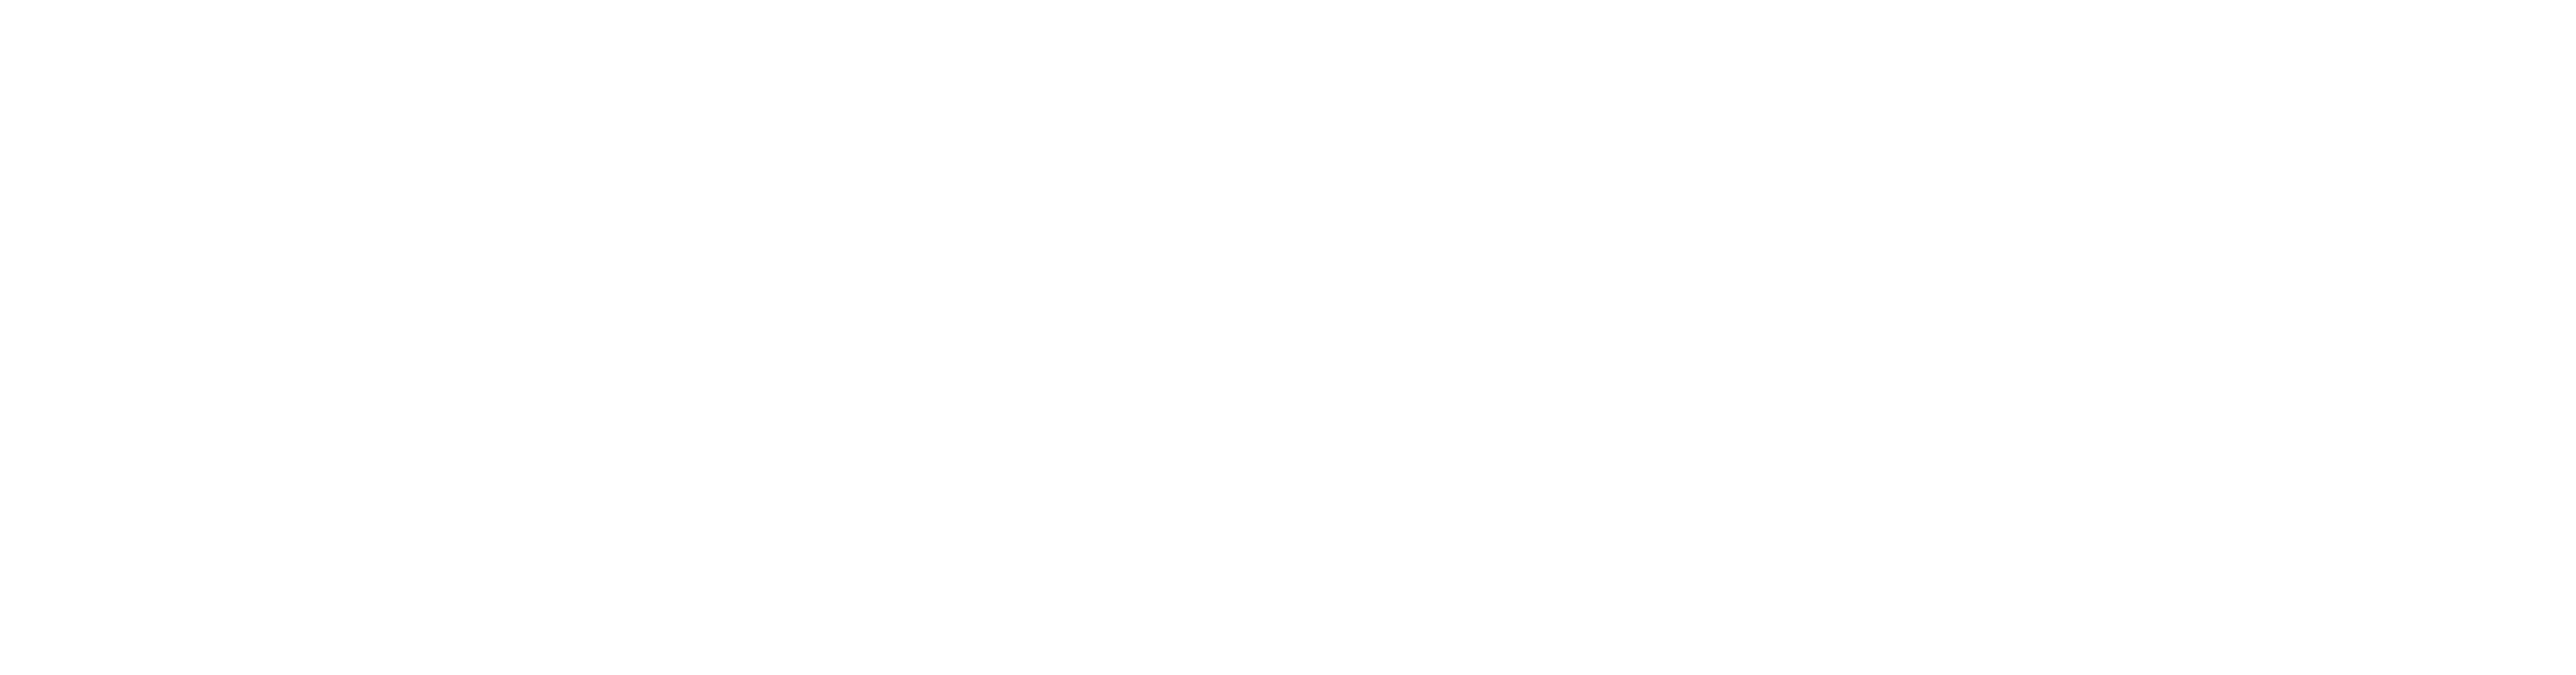 Vanguard Property RealEstate logo